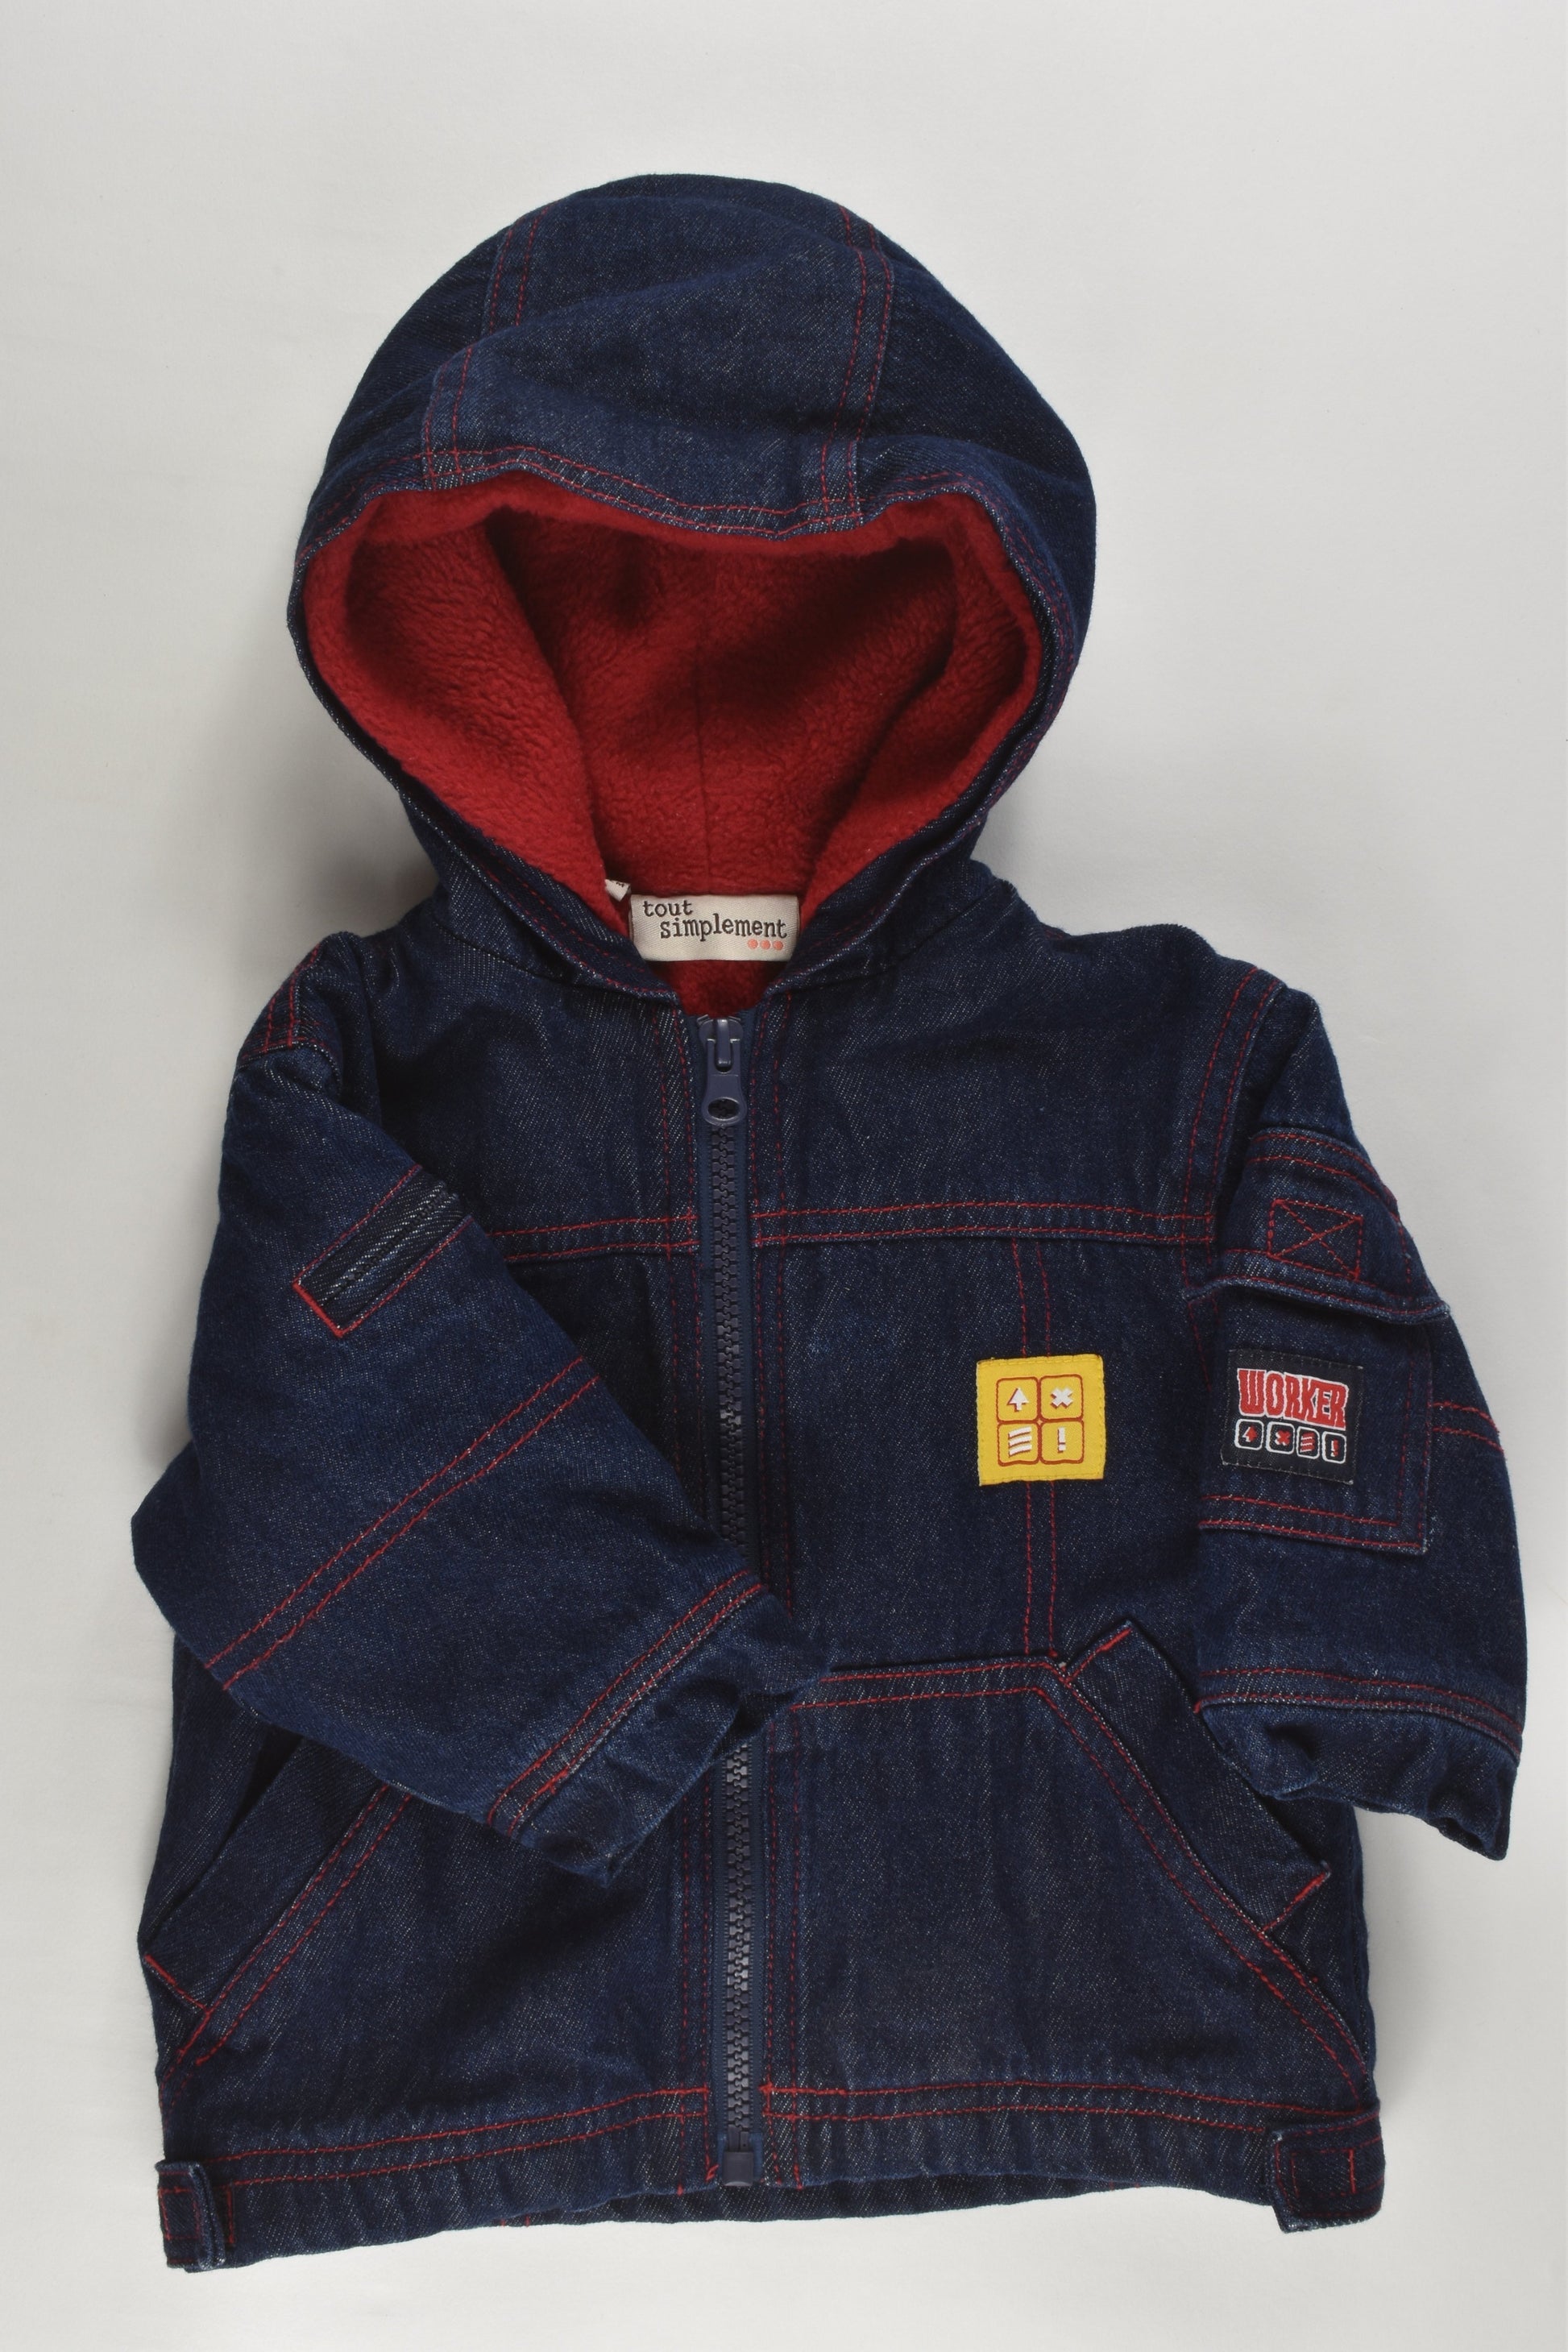 Tout Simplement Size 0 (12 months, 74 cm) Fleece Lined Hooded Denim Jacket